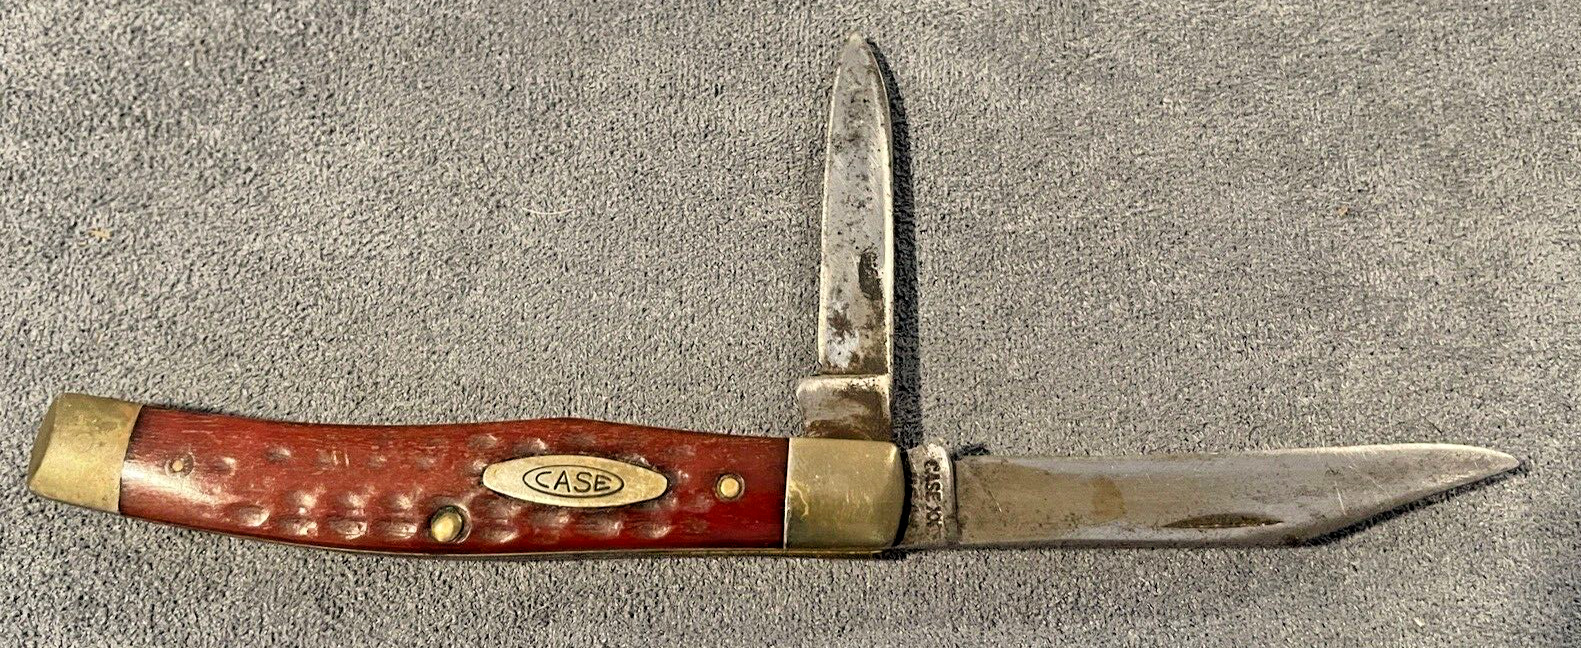 Vintage (1965-69) Case 6232 2 Blade Texas Jack with red bone handle--2089.23